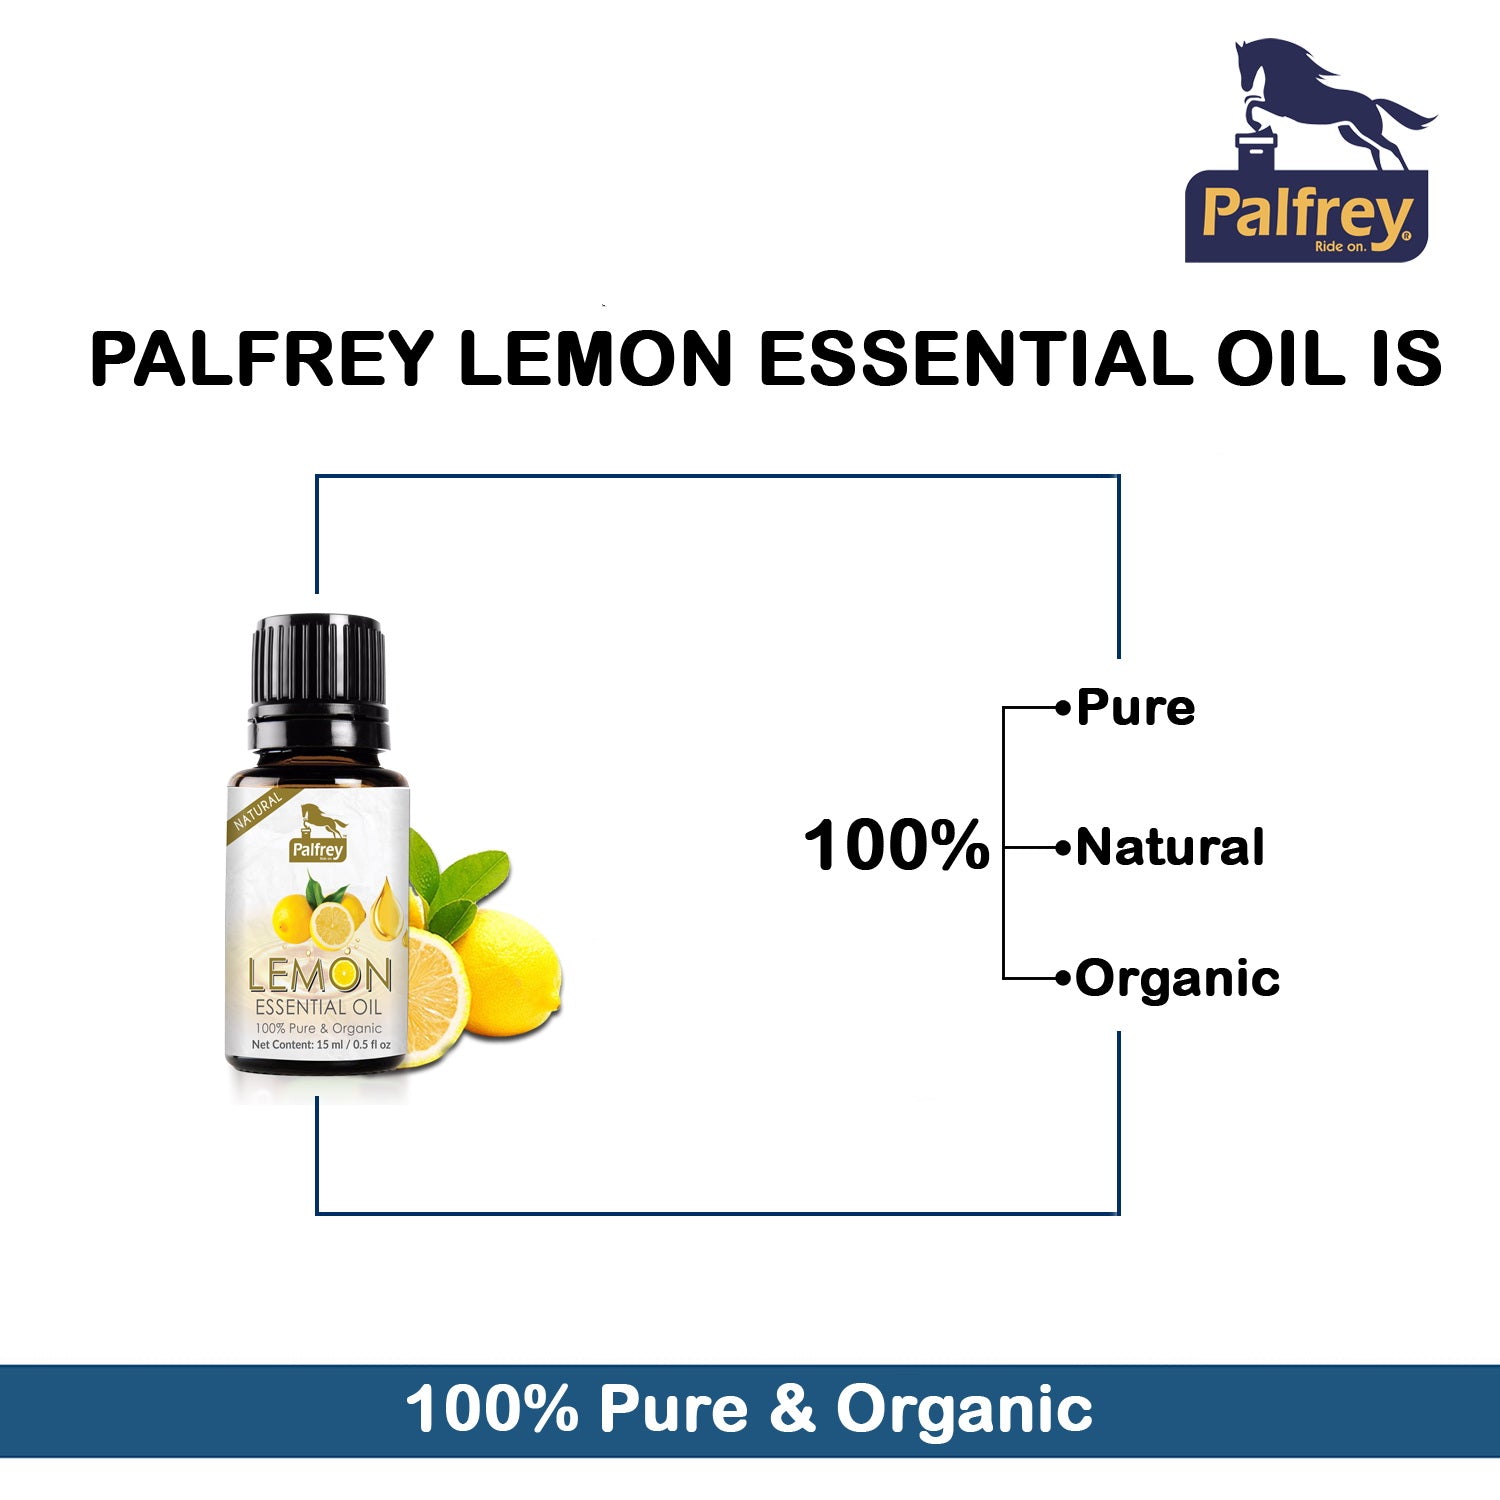 Palfrey Lemon Essential Oil 15ml